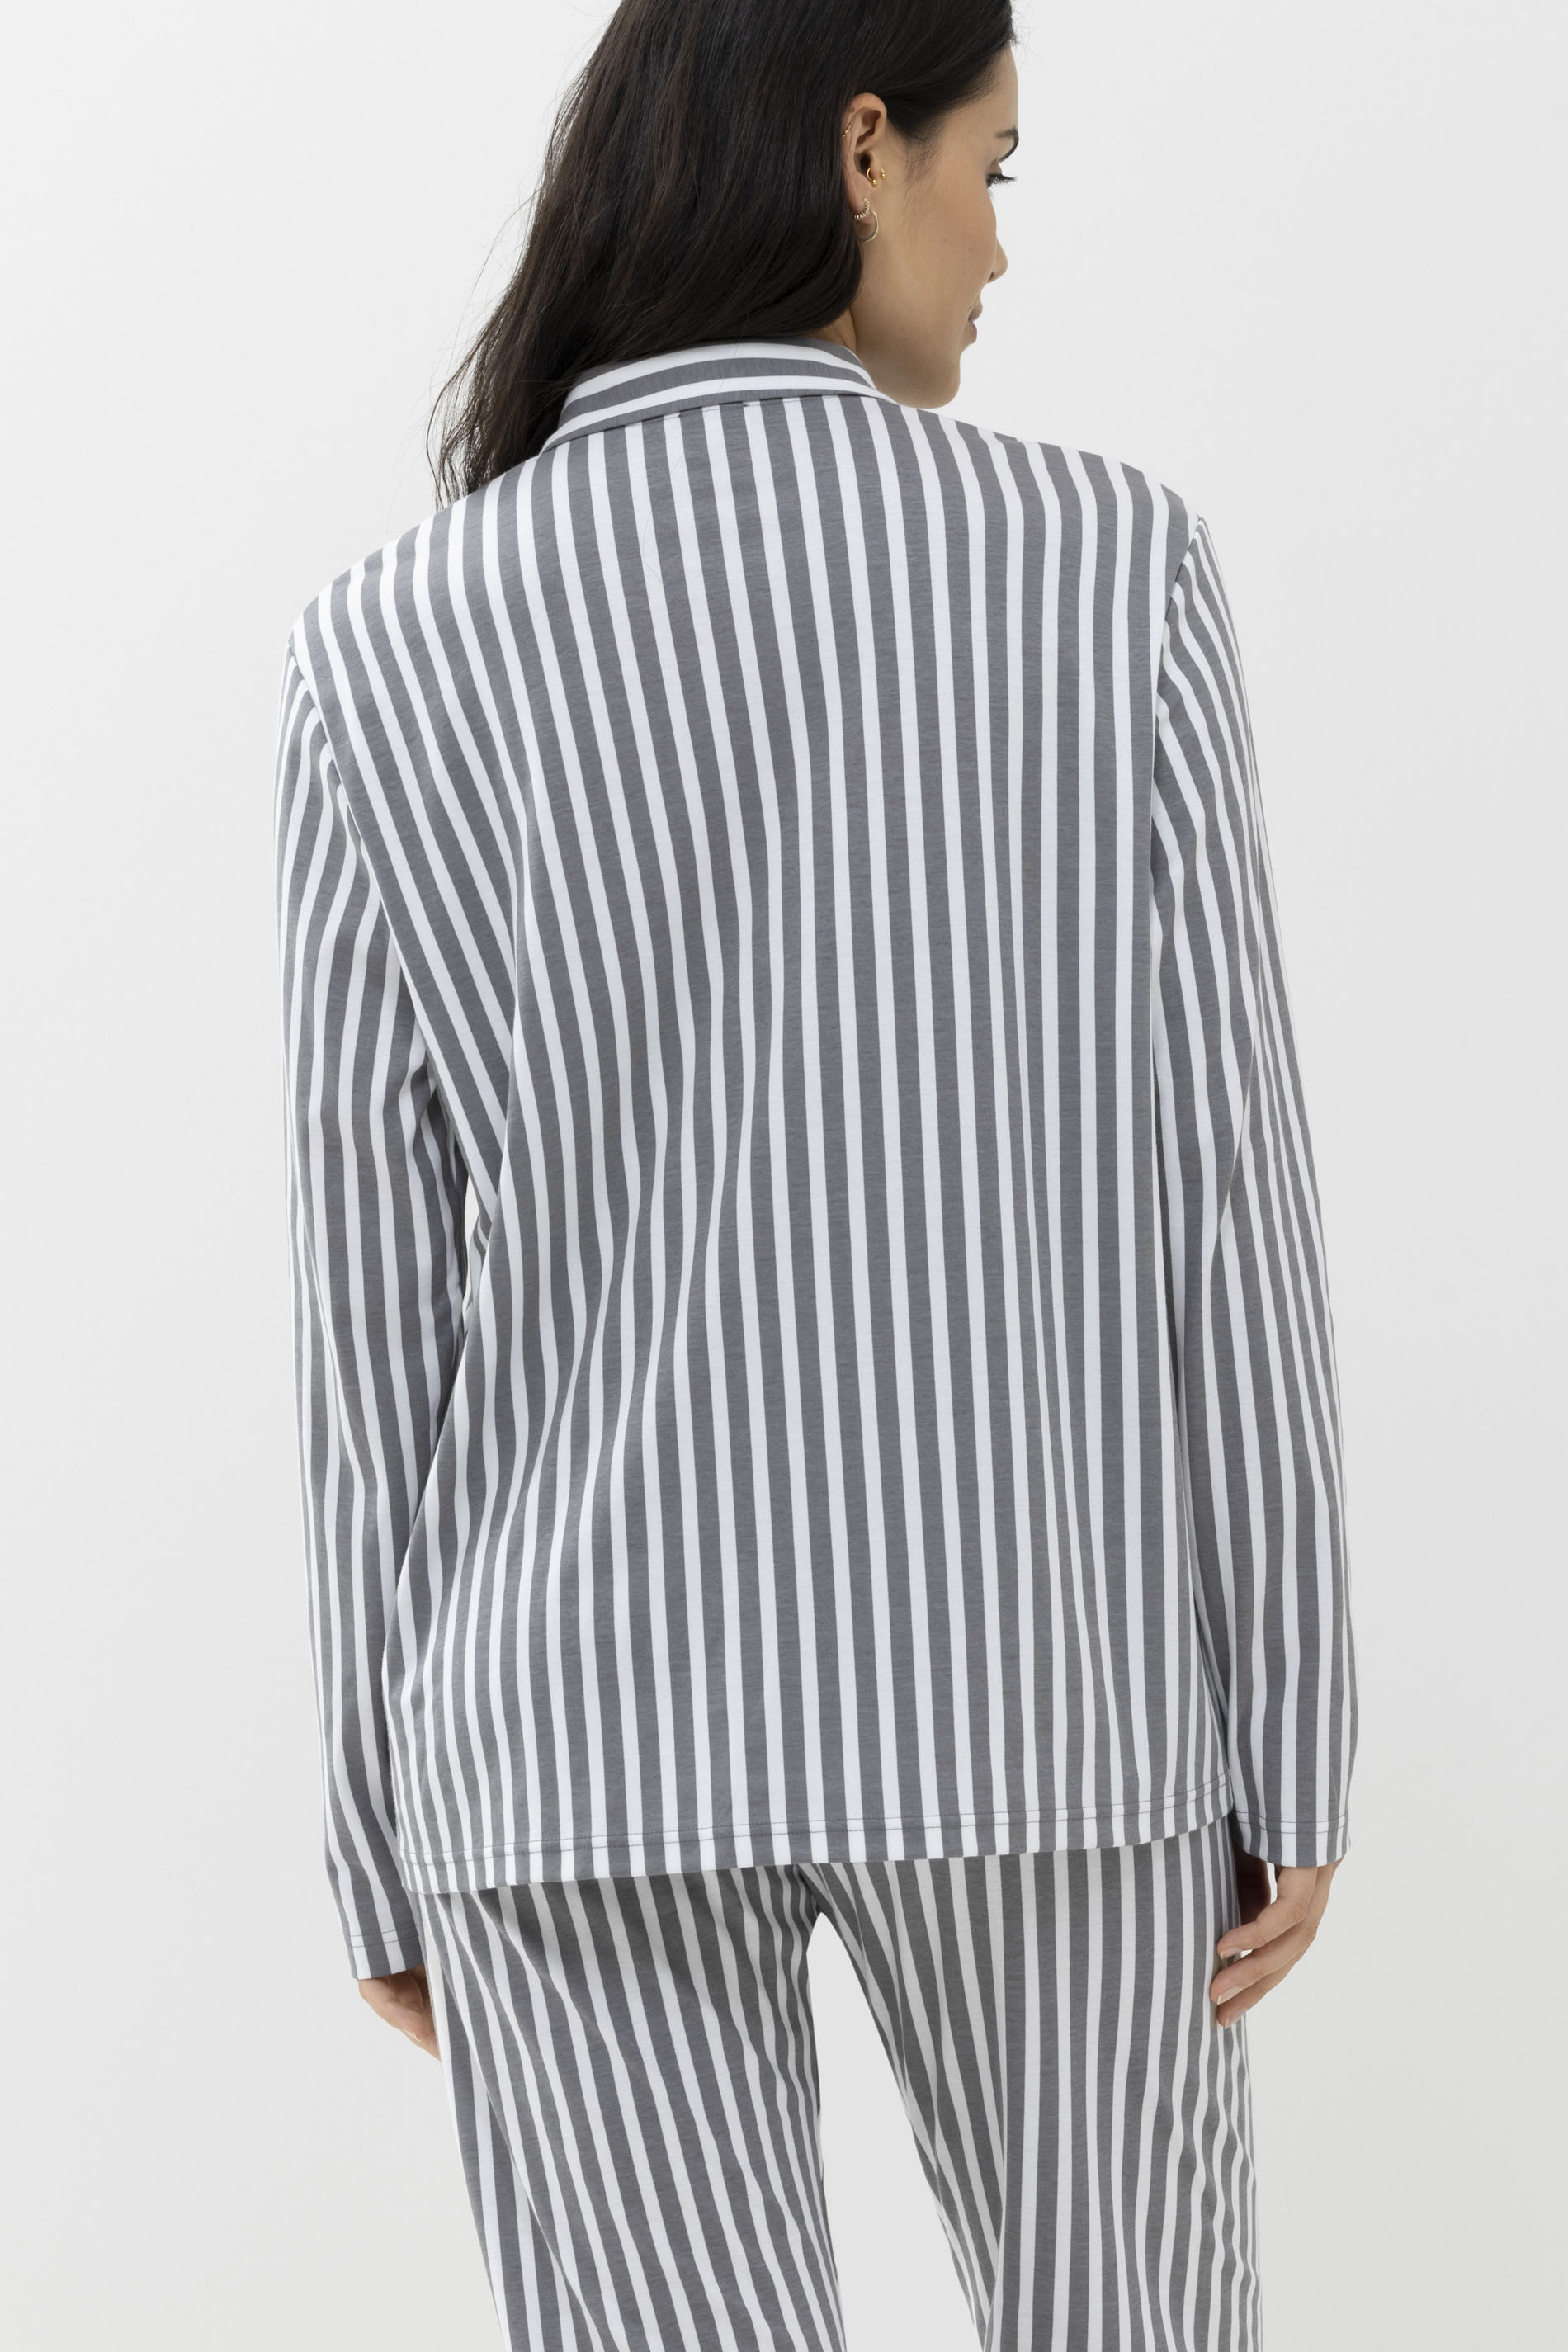 Pyjama shirt Lovely Grey Serie Sleepsation Rear View | mey®